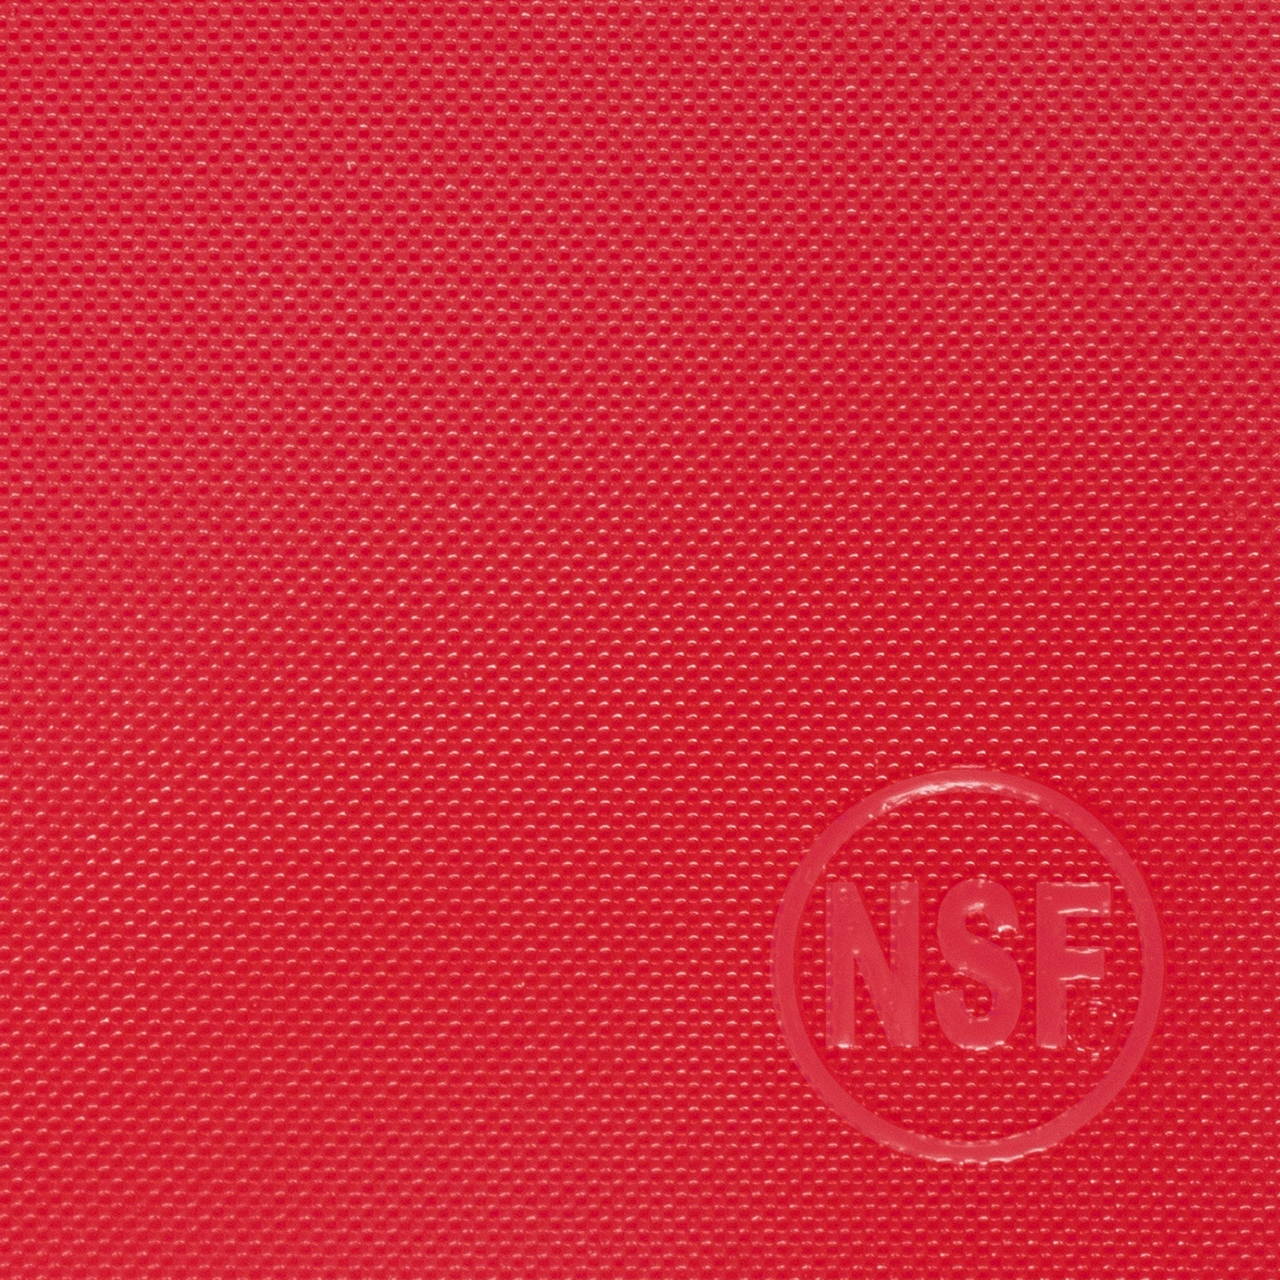 Cutting Board Restaurantware Color: Red, Size: 18 W x 24 L